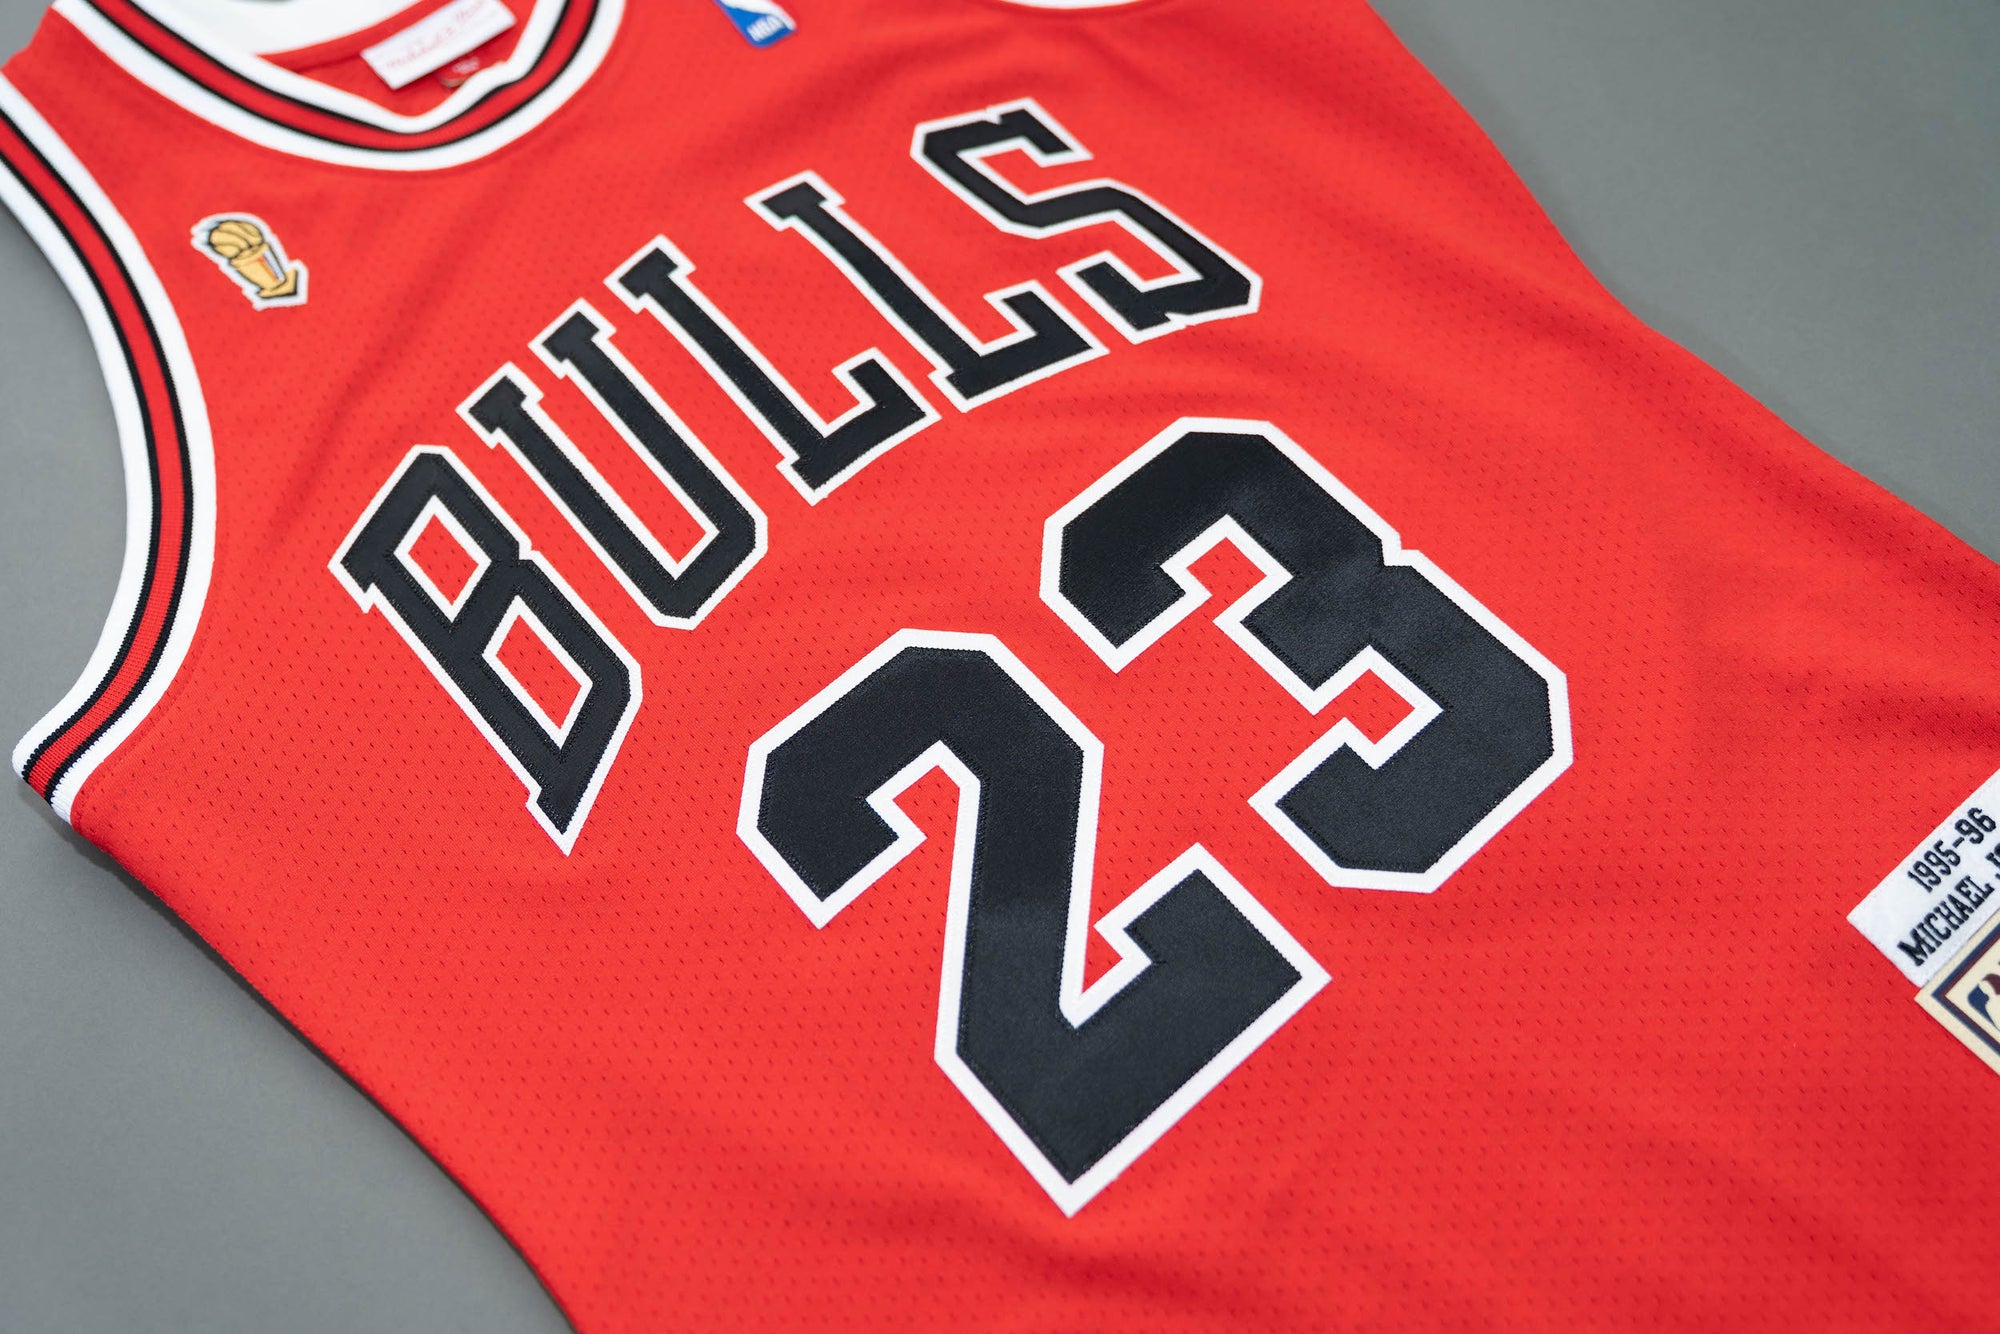 Mitchell & Ness Authentic Jersey Chicago Bulls 1995-96 Michael Jordan